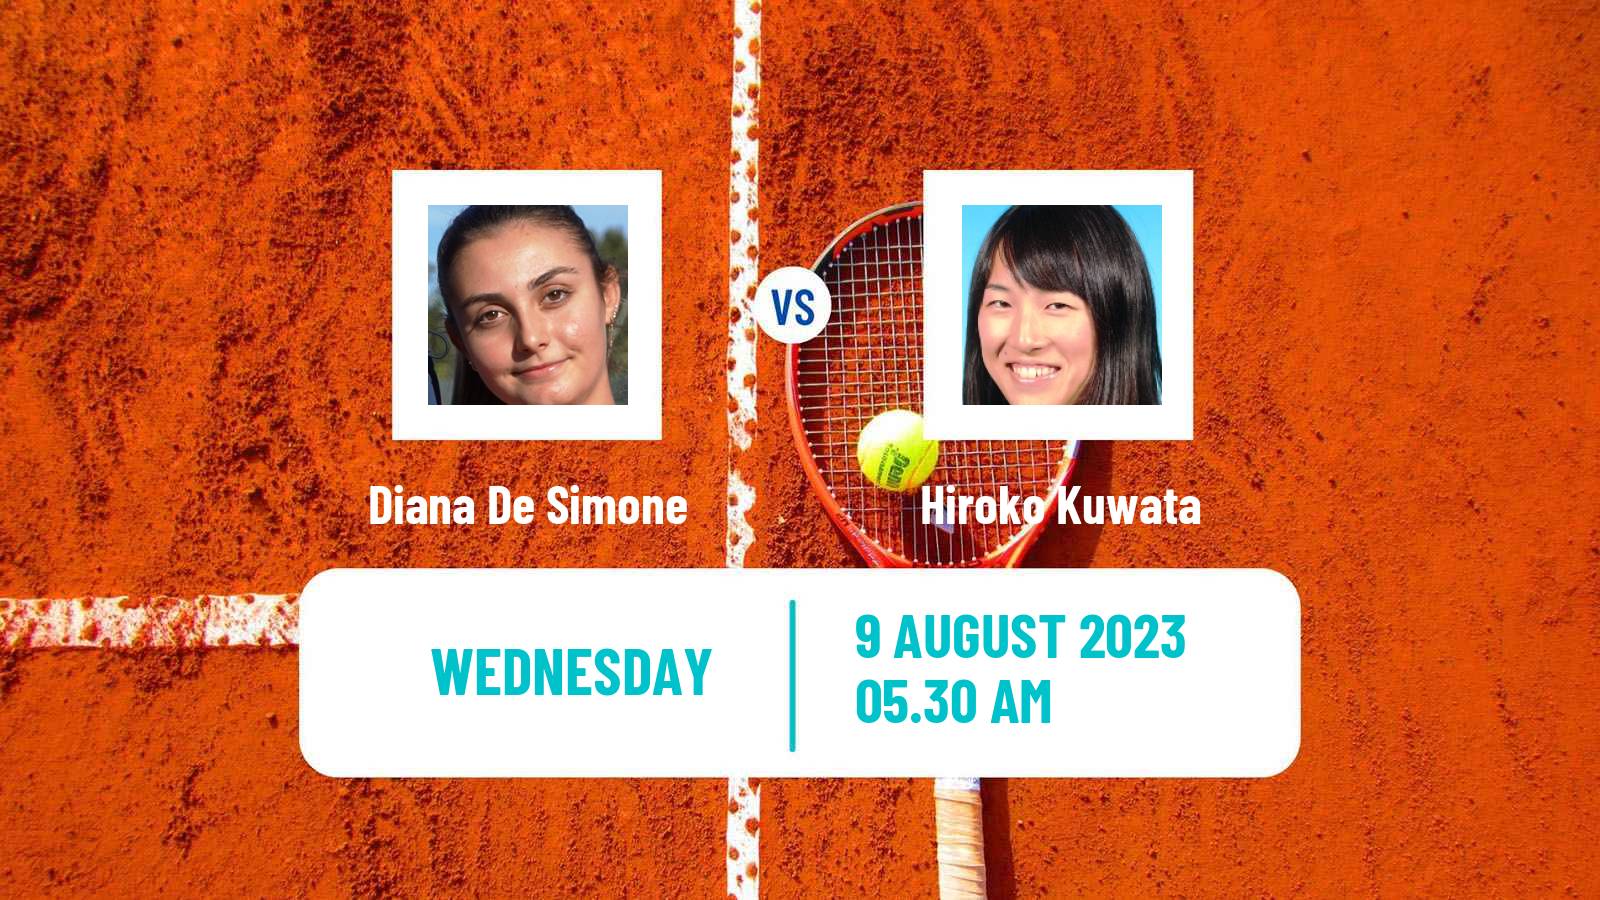 Tennis ITF W15 Monastir 22 Women Diana De Simone - Hiroko Kuwata